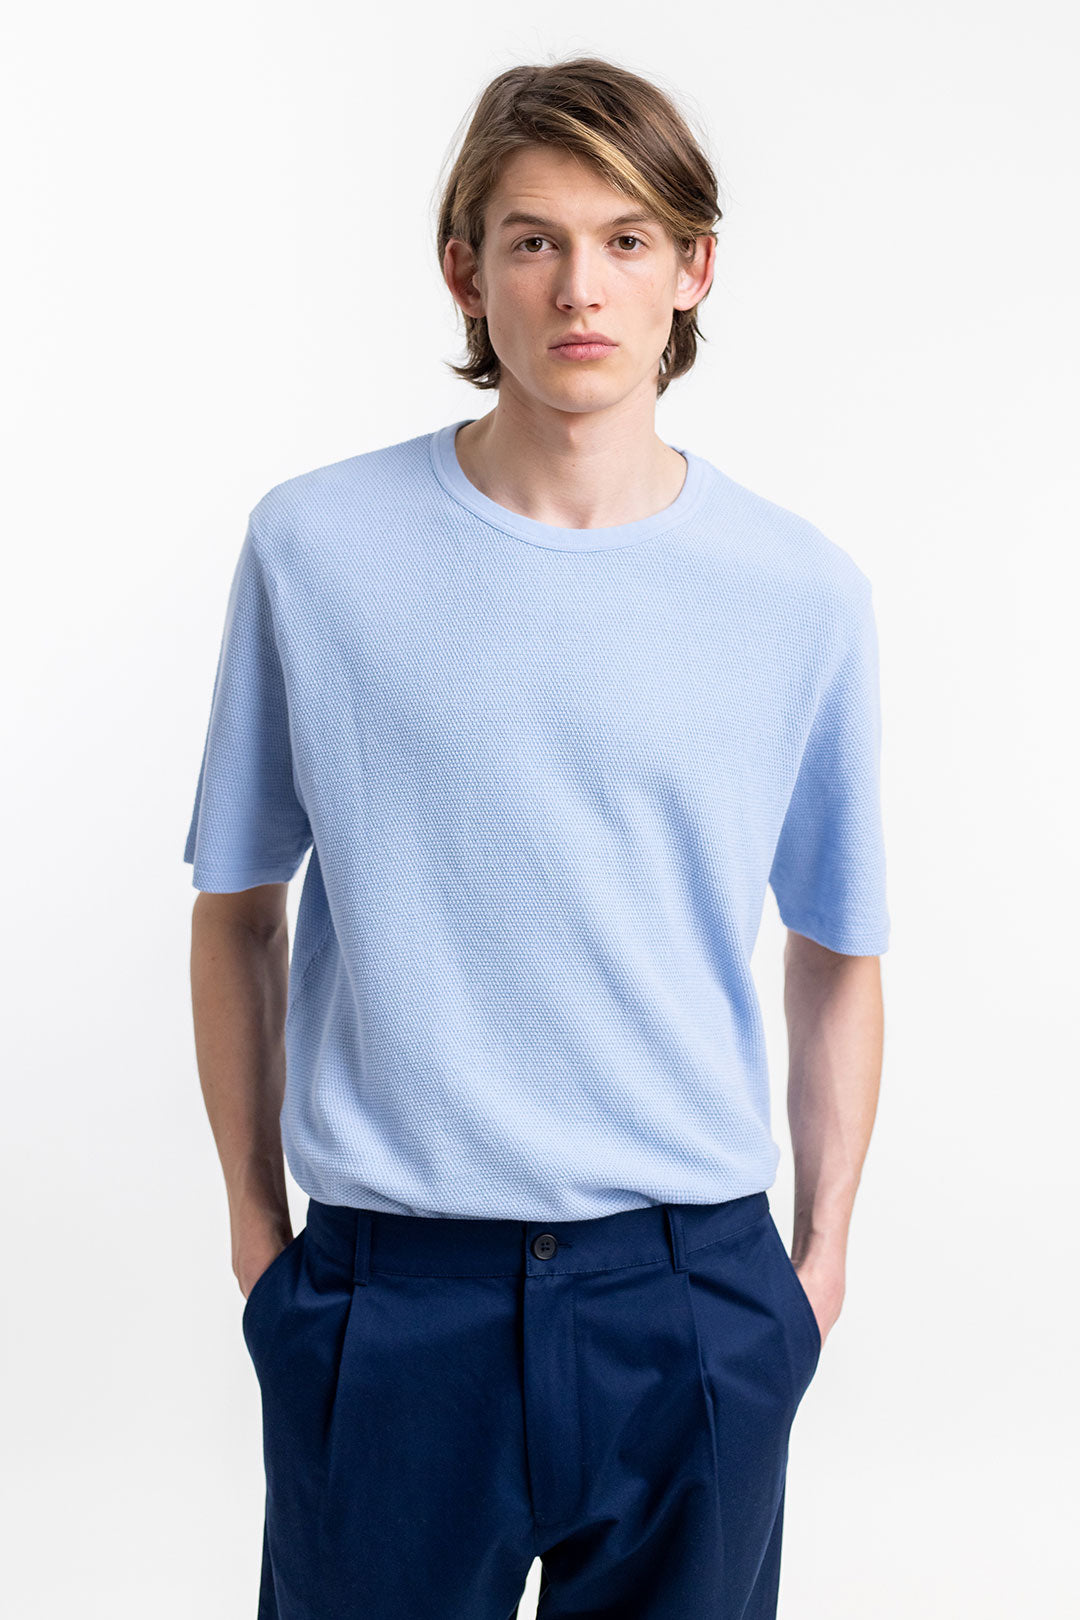 Männer Model trägt das Rotholz T-Shirt aus Waffle Cotton in Hellblau